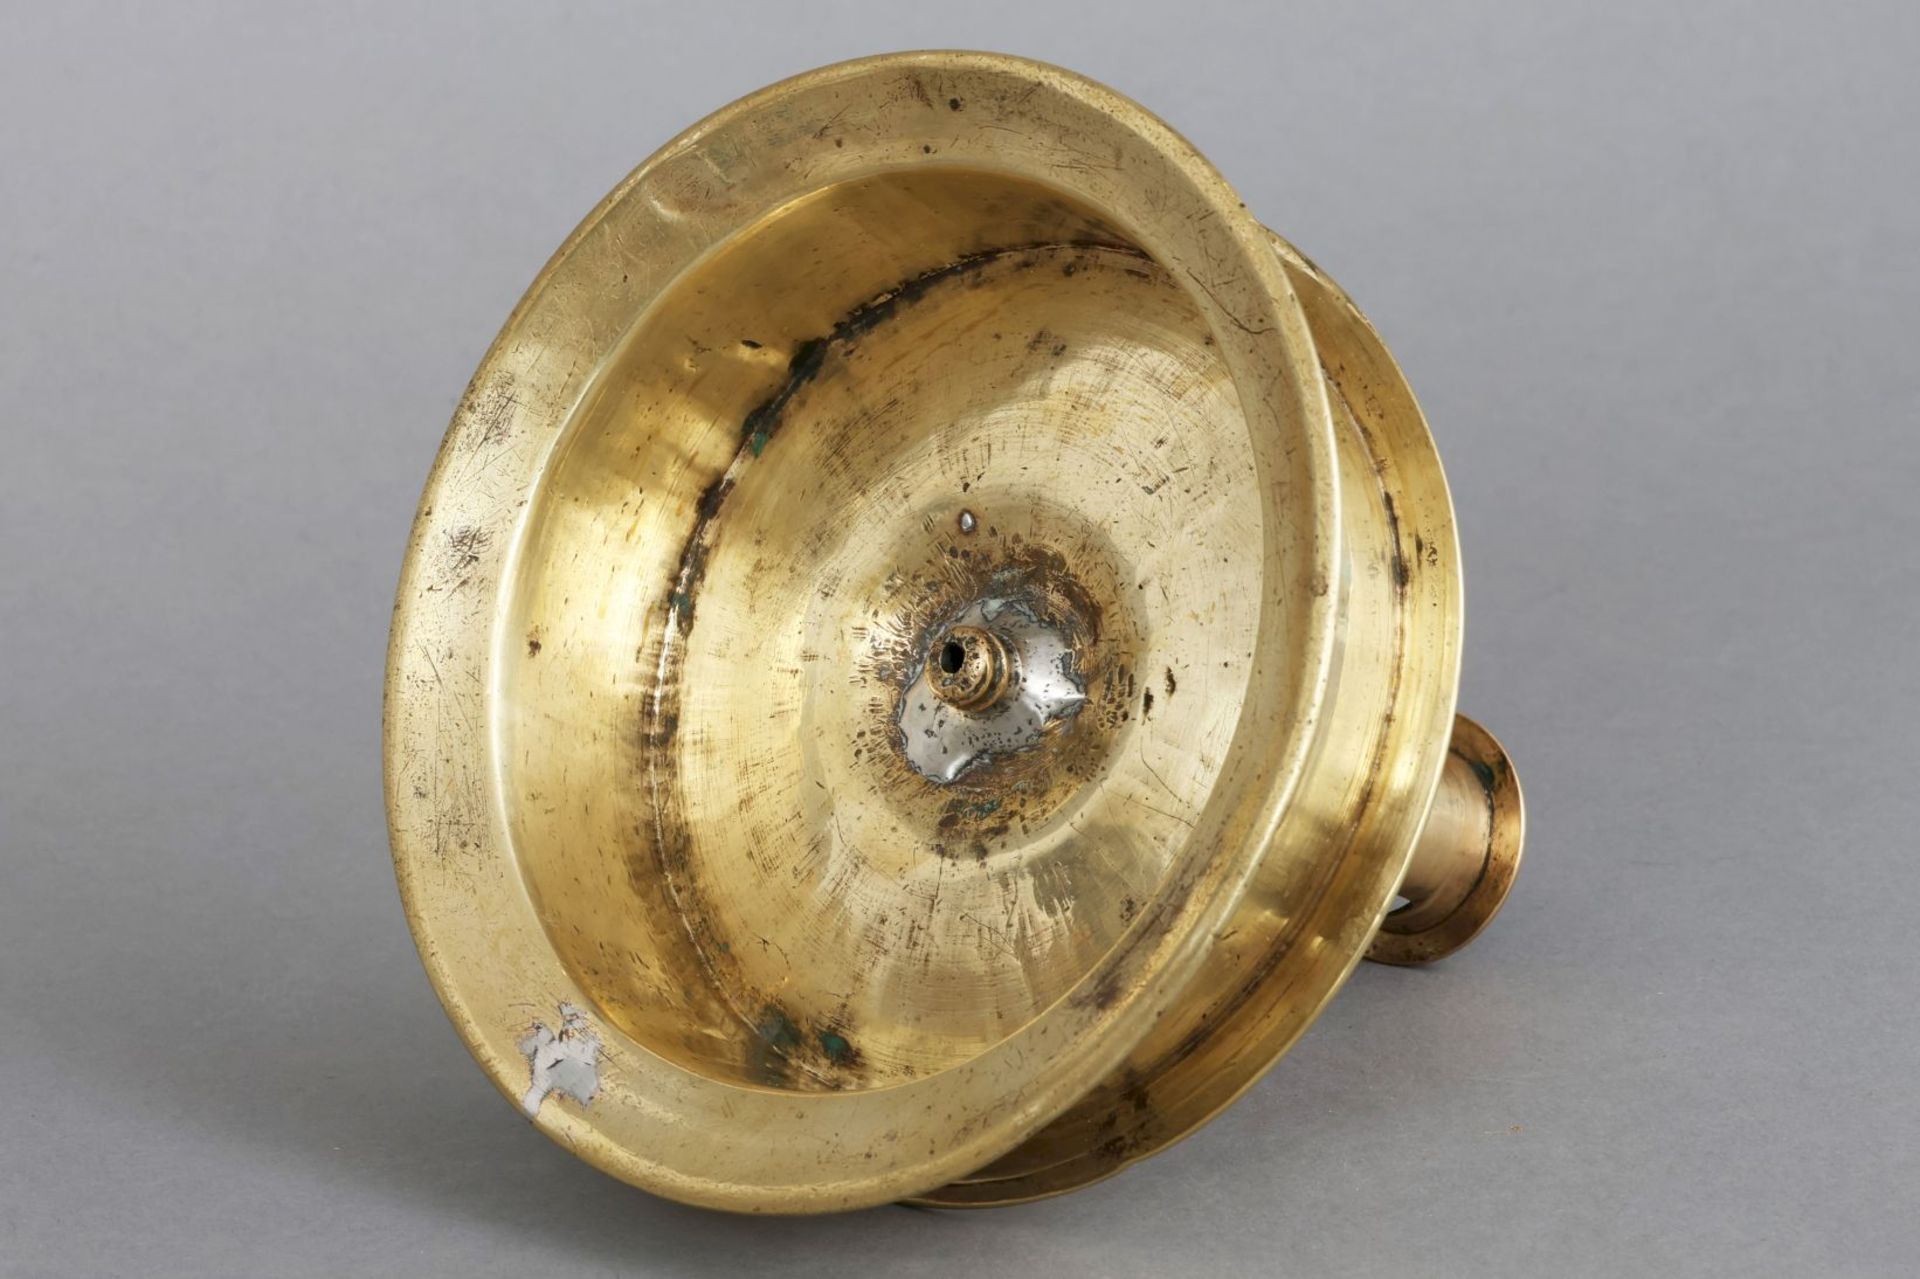 Glockenfußleuchter des 17. Jahrhunderts - Image 4 of 4